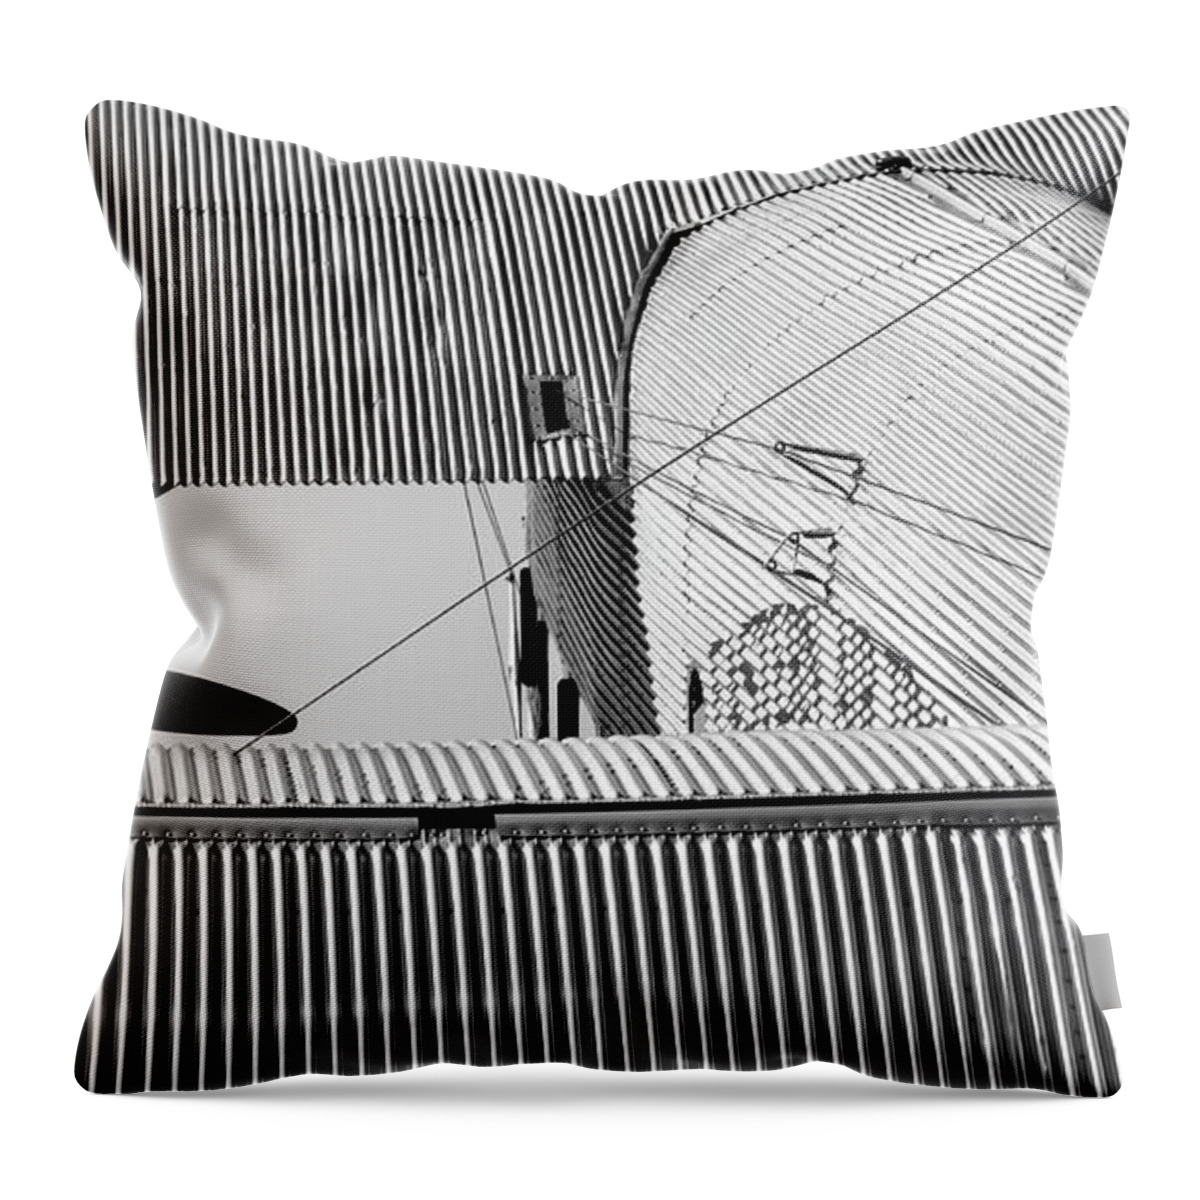 2012 Throw Pillow featuring the photograph Tin Drag by Chris Buff